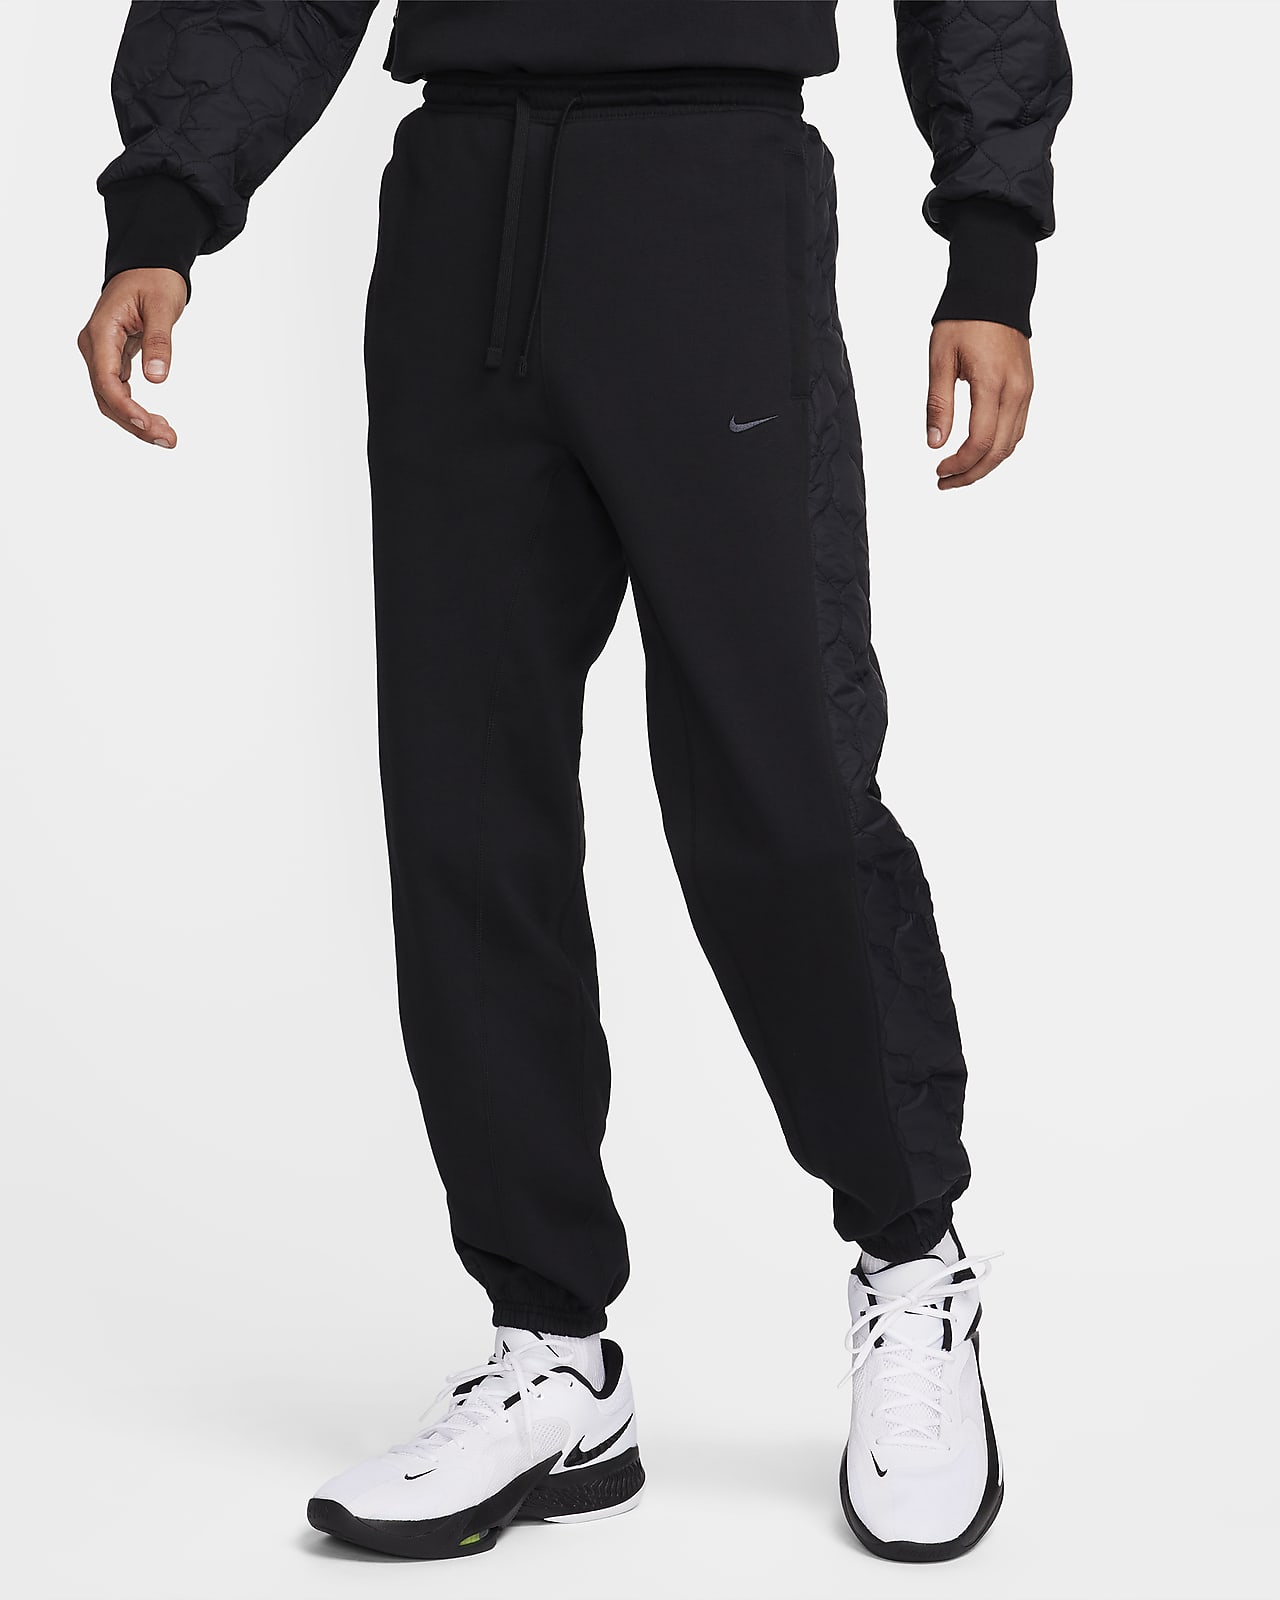 Pants de básquetbol para hombre Nike Standard Issue